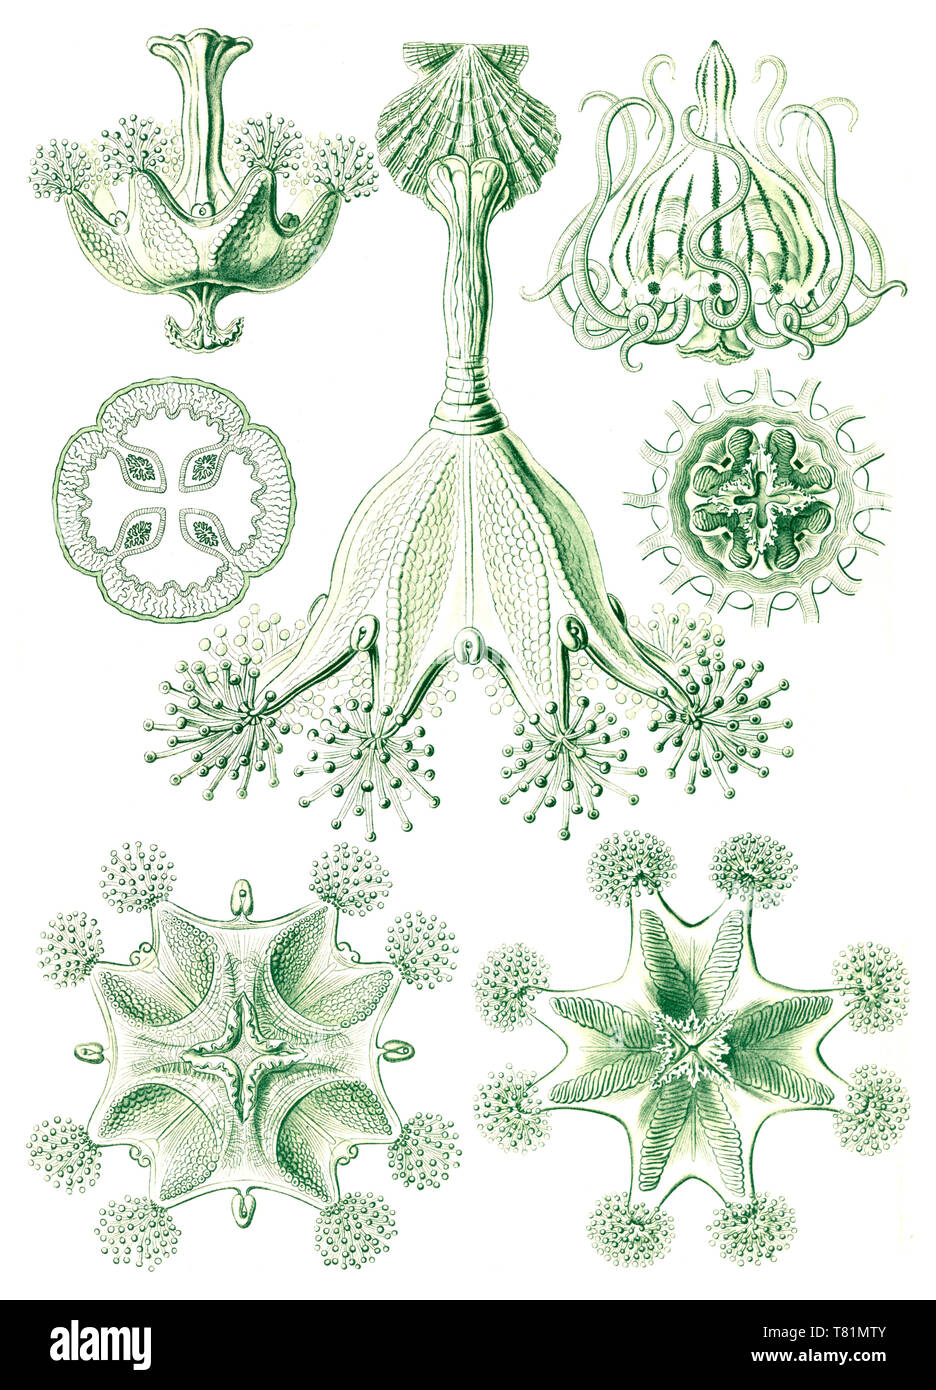 Ernst Haeckel, Stauromedusae, Stalked Jellyfish Stock Photo